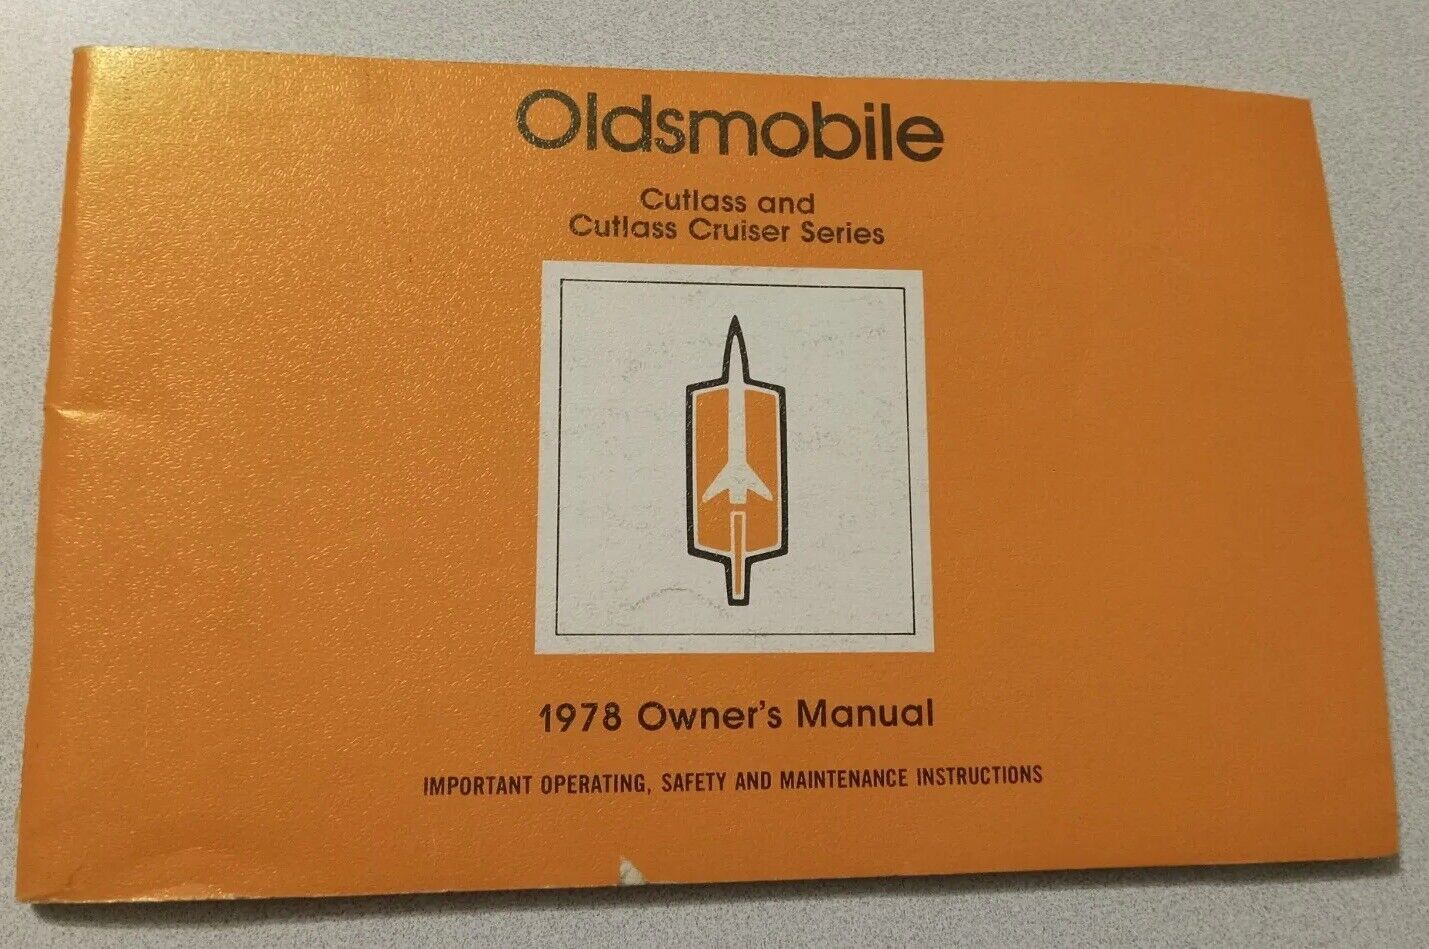 Vintage 1978 Owners Manual for Cutlass and Cruiser Cutlass Series